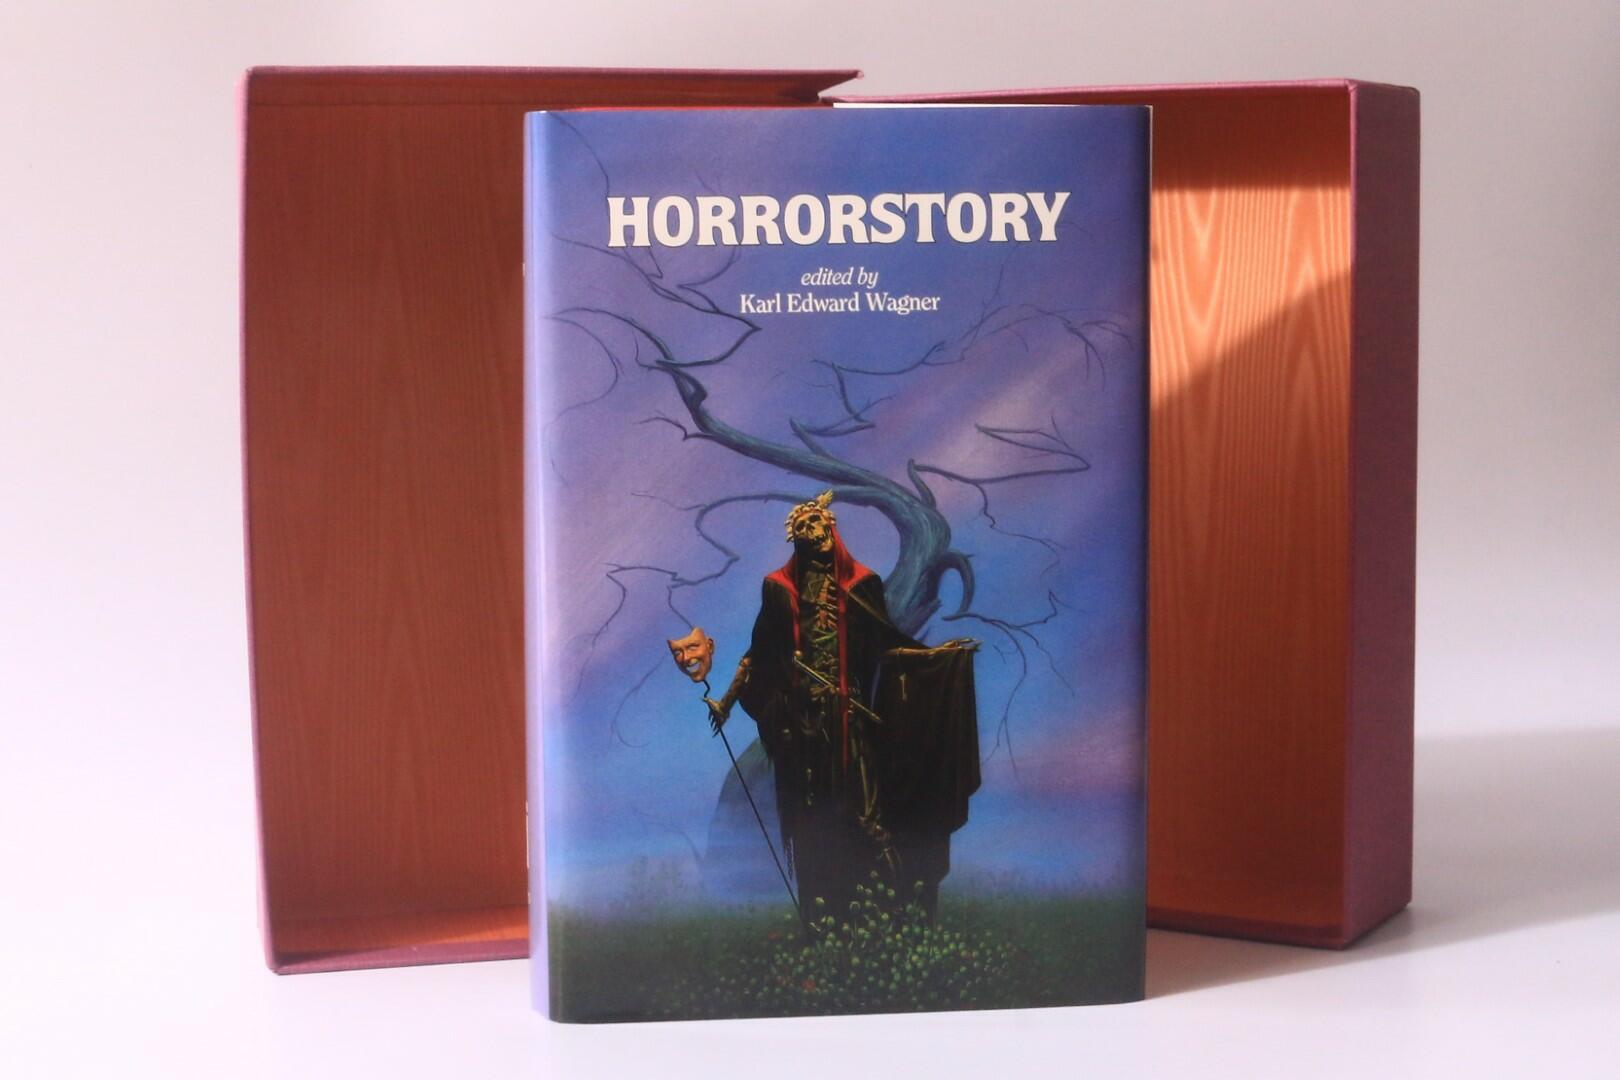 Karl Edward Wagner [ed.] - Horrorstory - Underwood Miller, 1989, Signed Limited Edition.